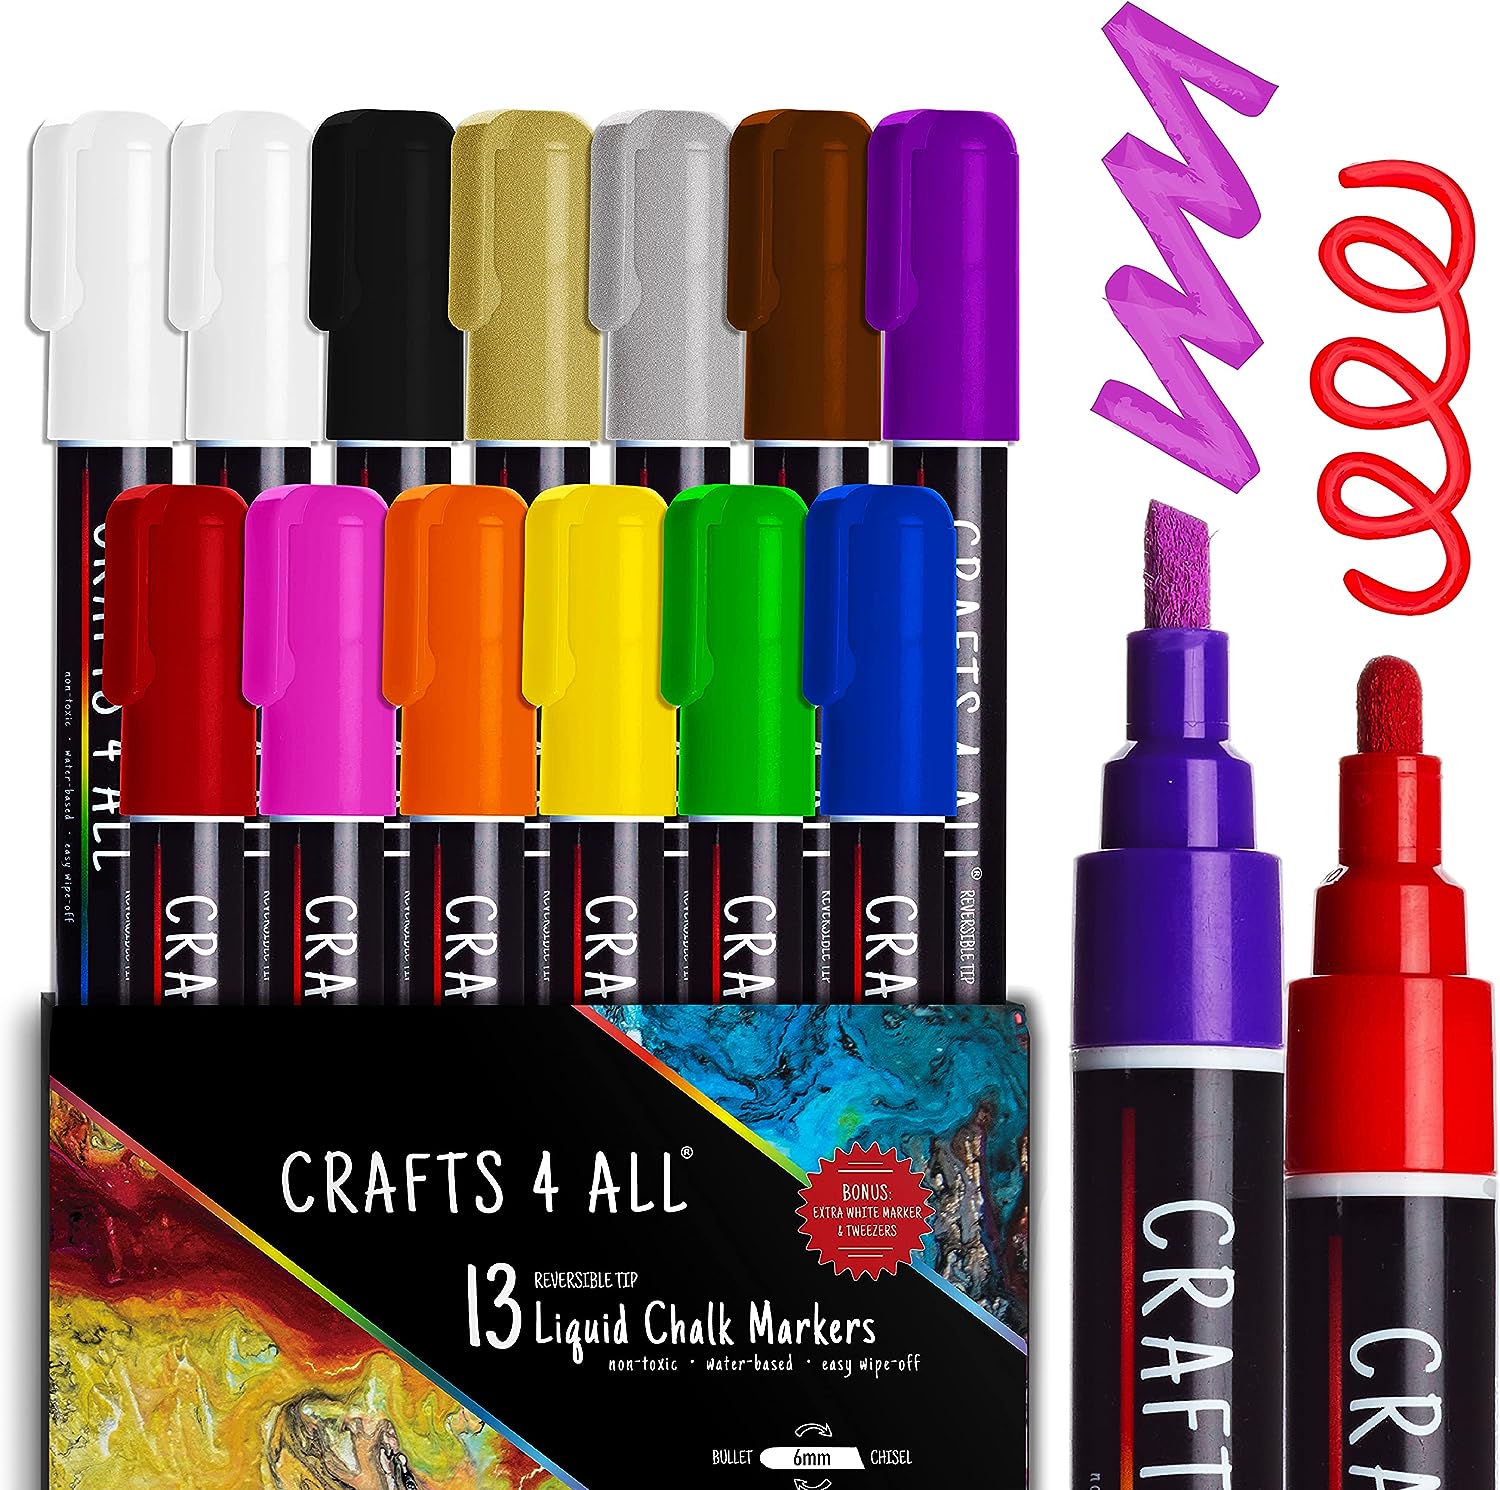 Crafts 4 All Liquid Chalk Markers For Blackboard [...]